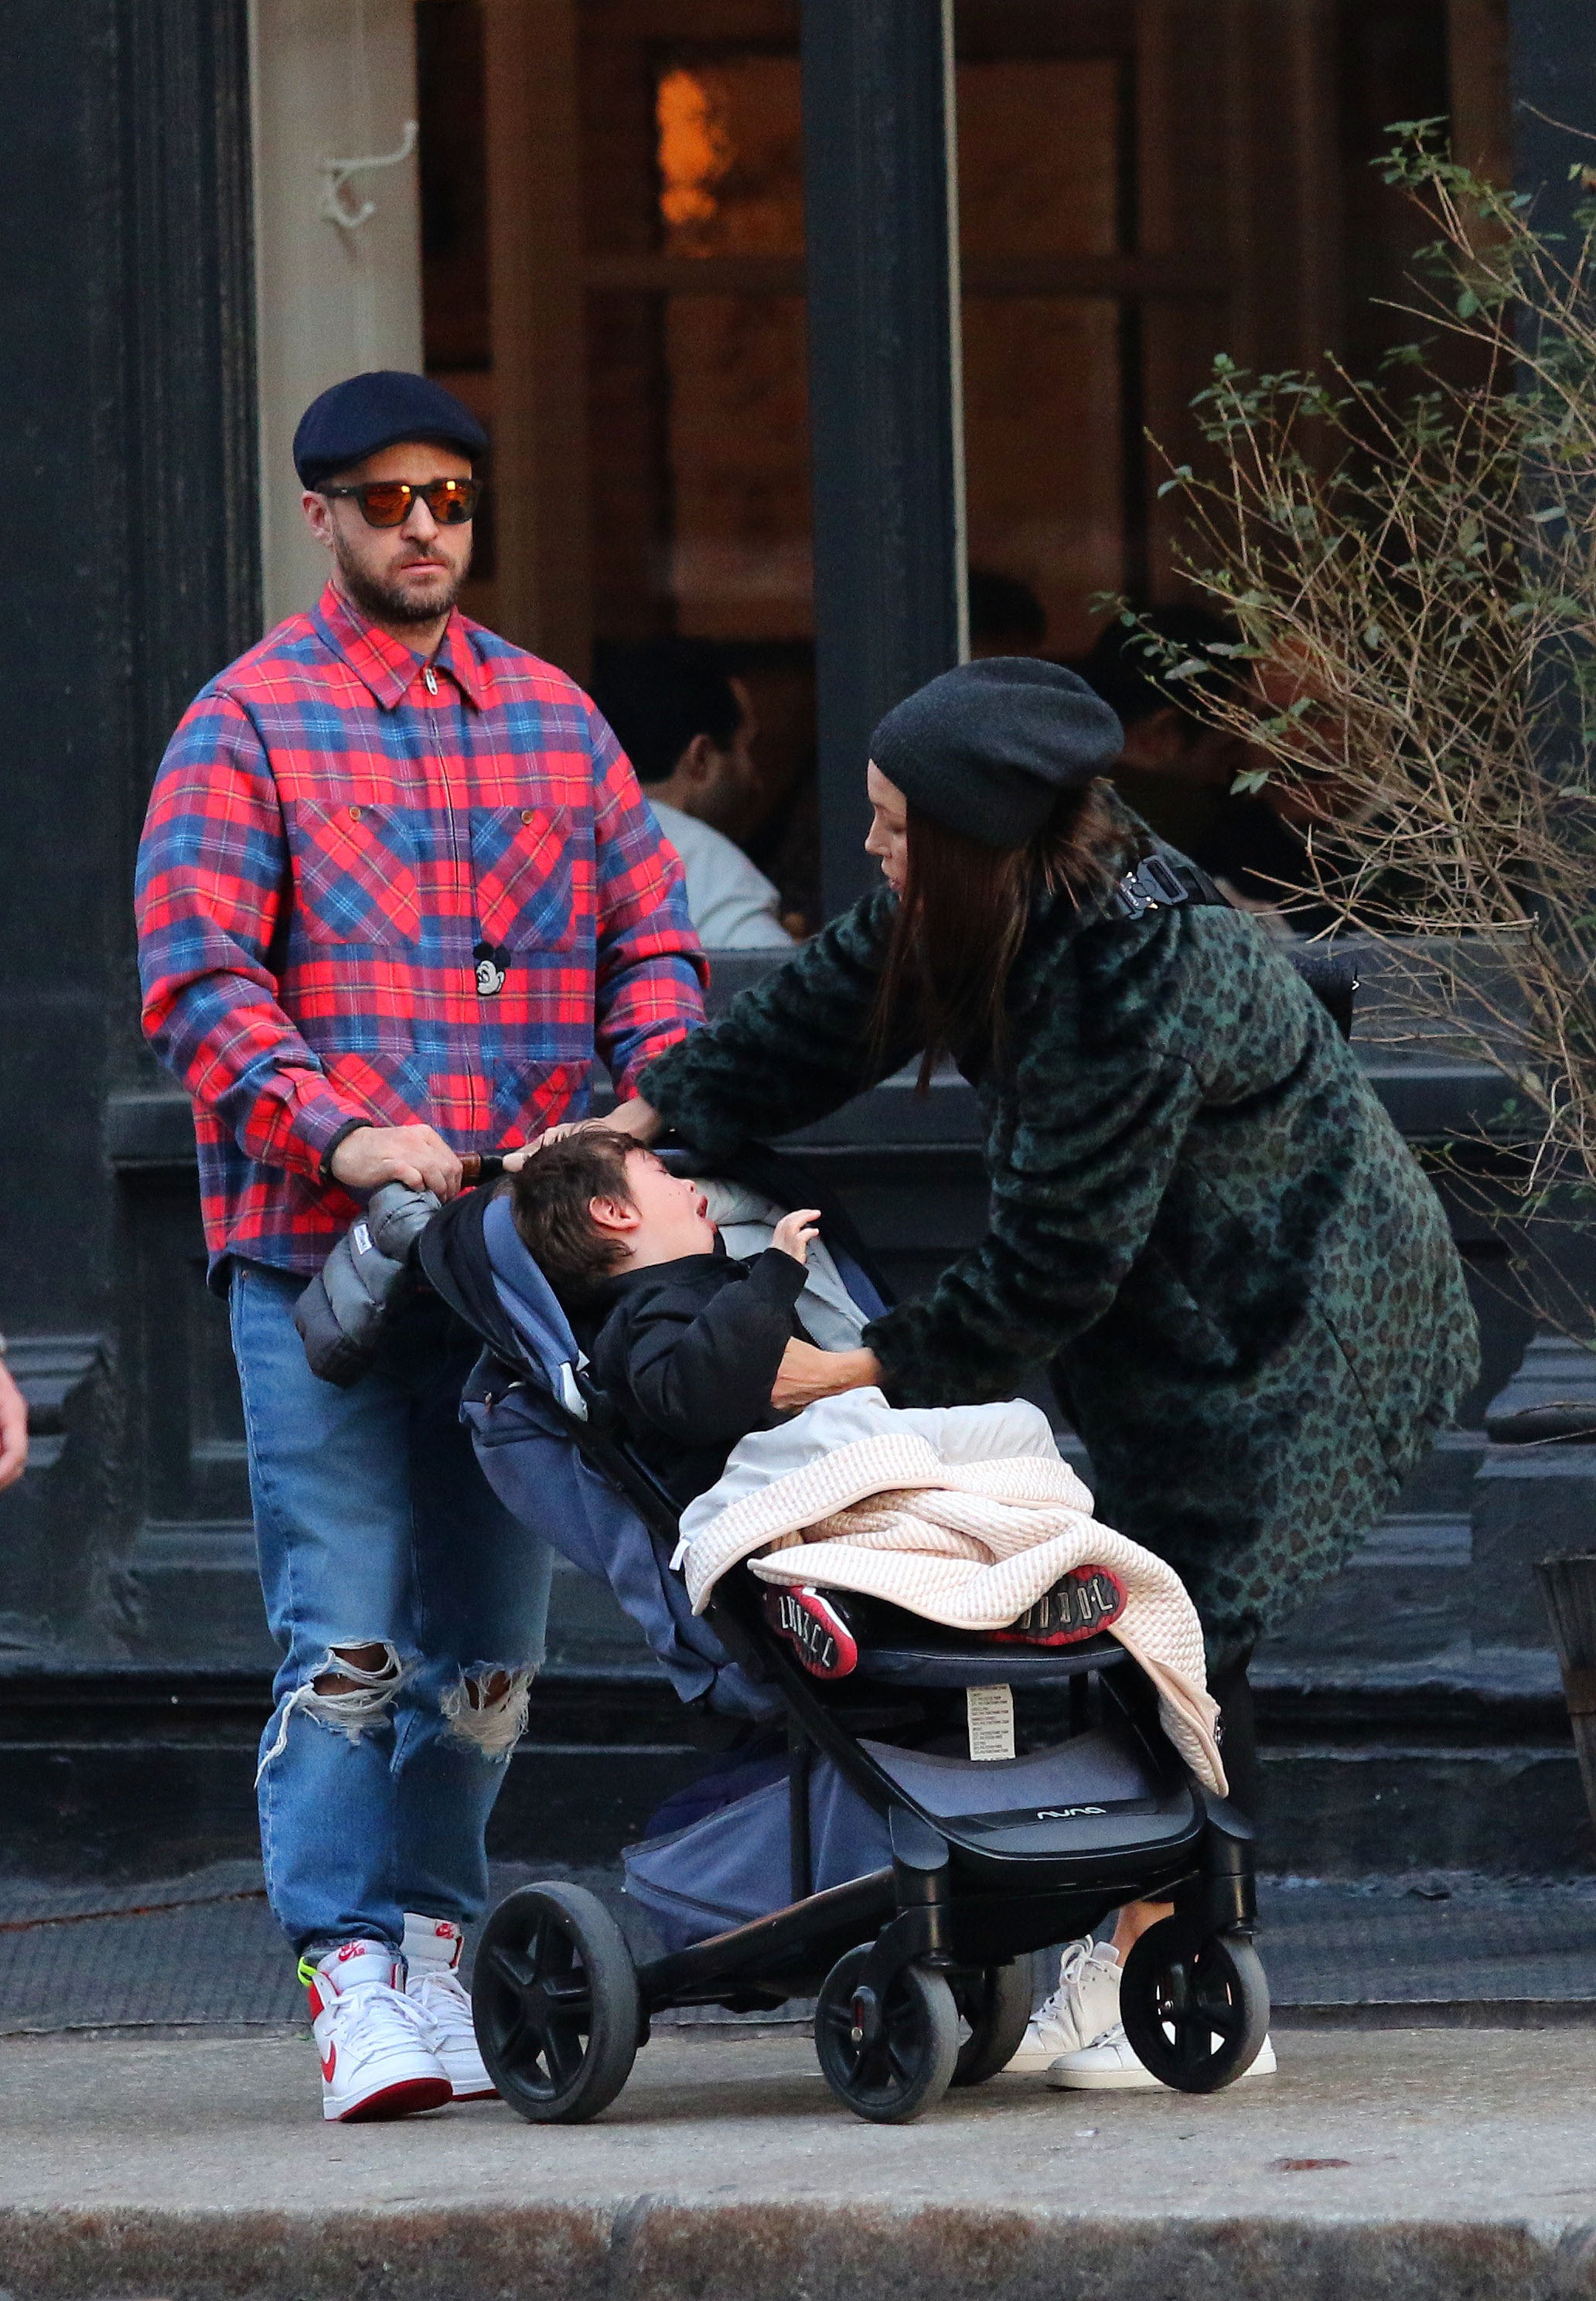 Justin Timberlake shows off adorable photos of baby son Silas